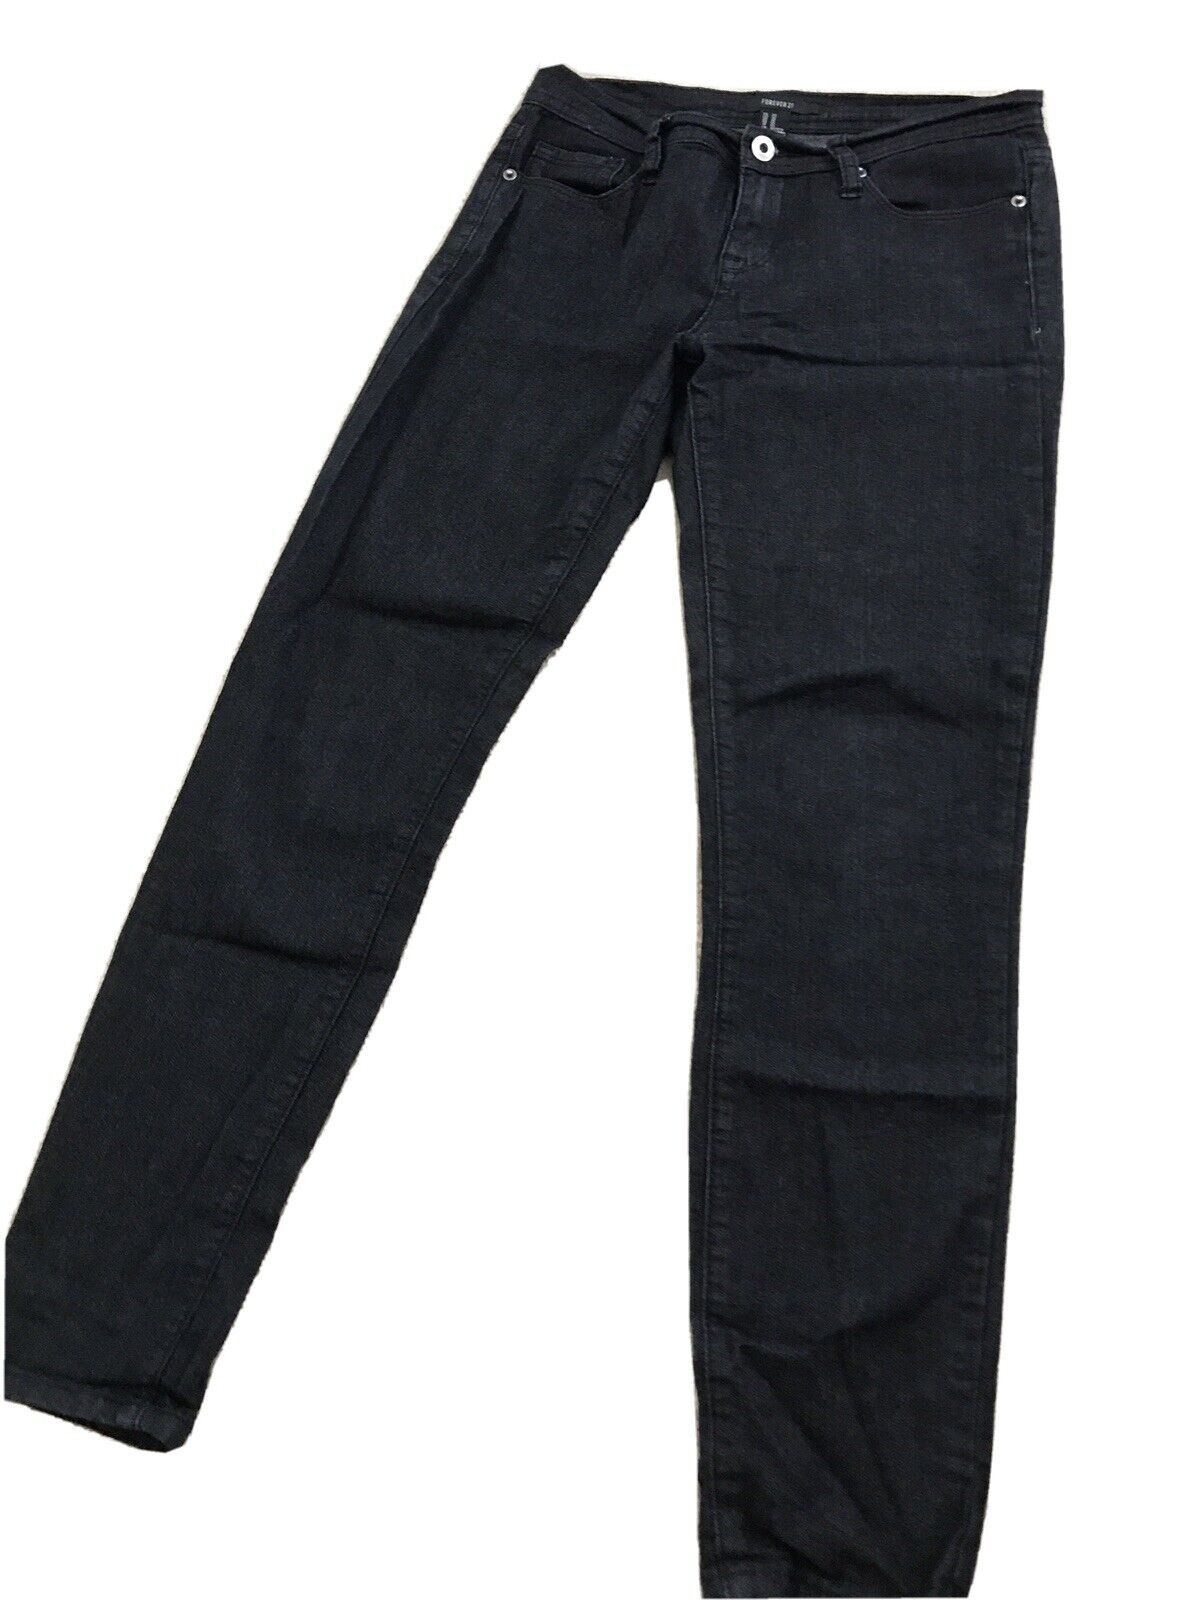 Boys Black Denim Jeans Pack Of 1